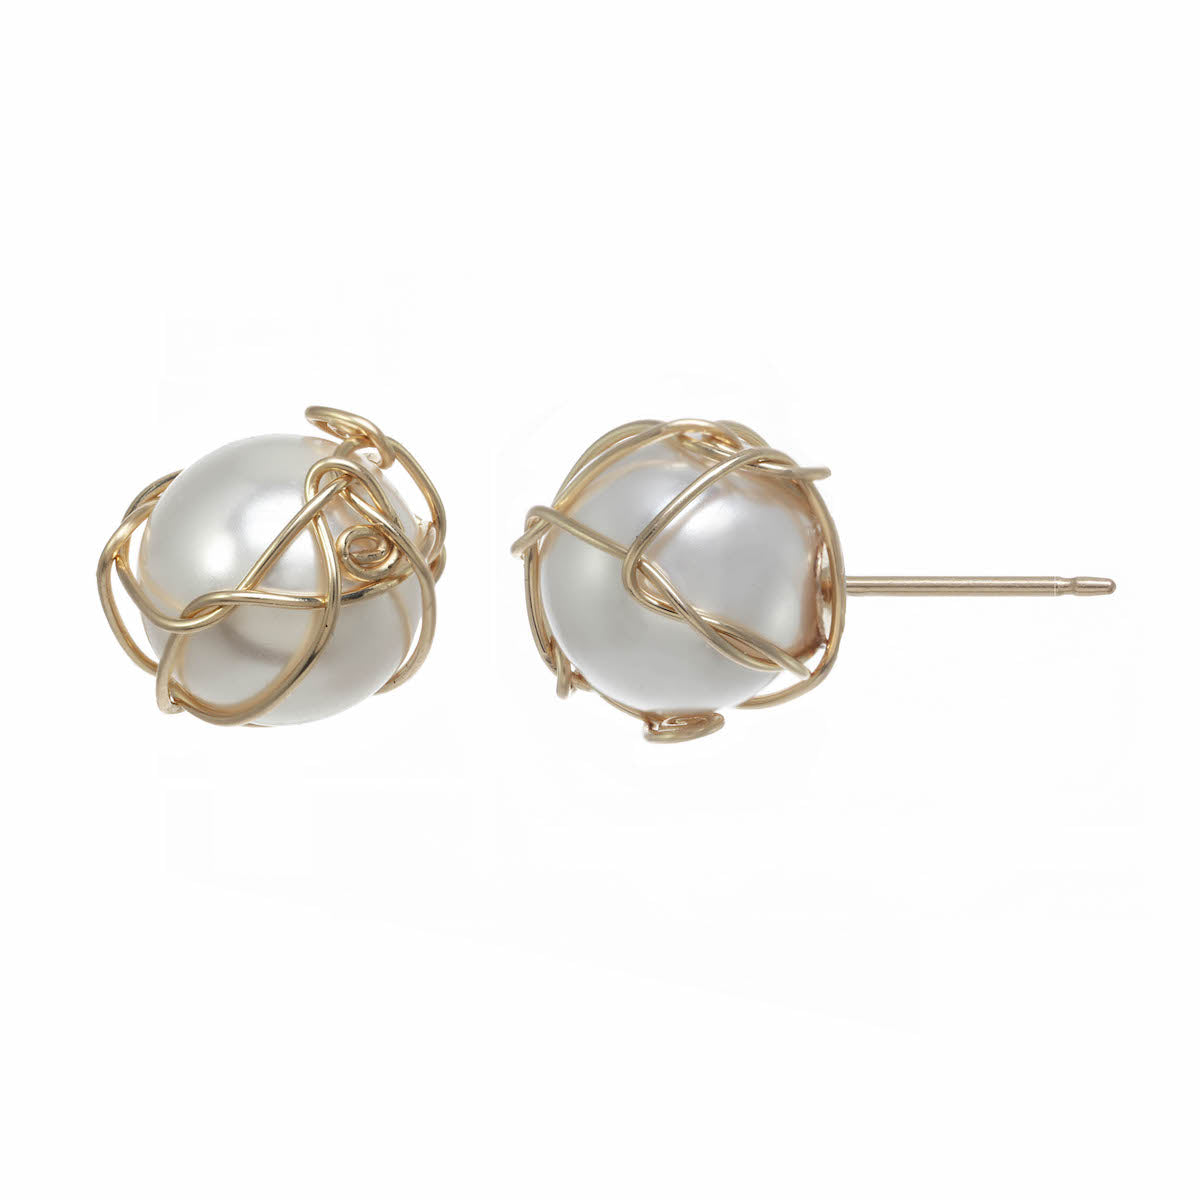 Wrapped Pearl Stud earrings